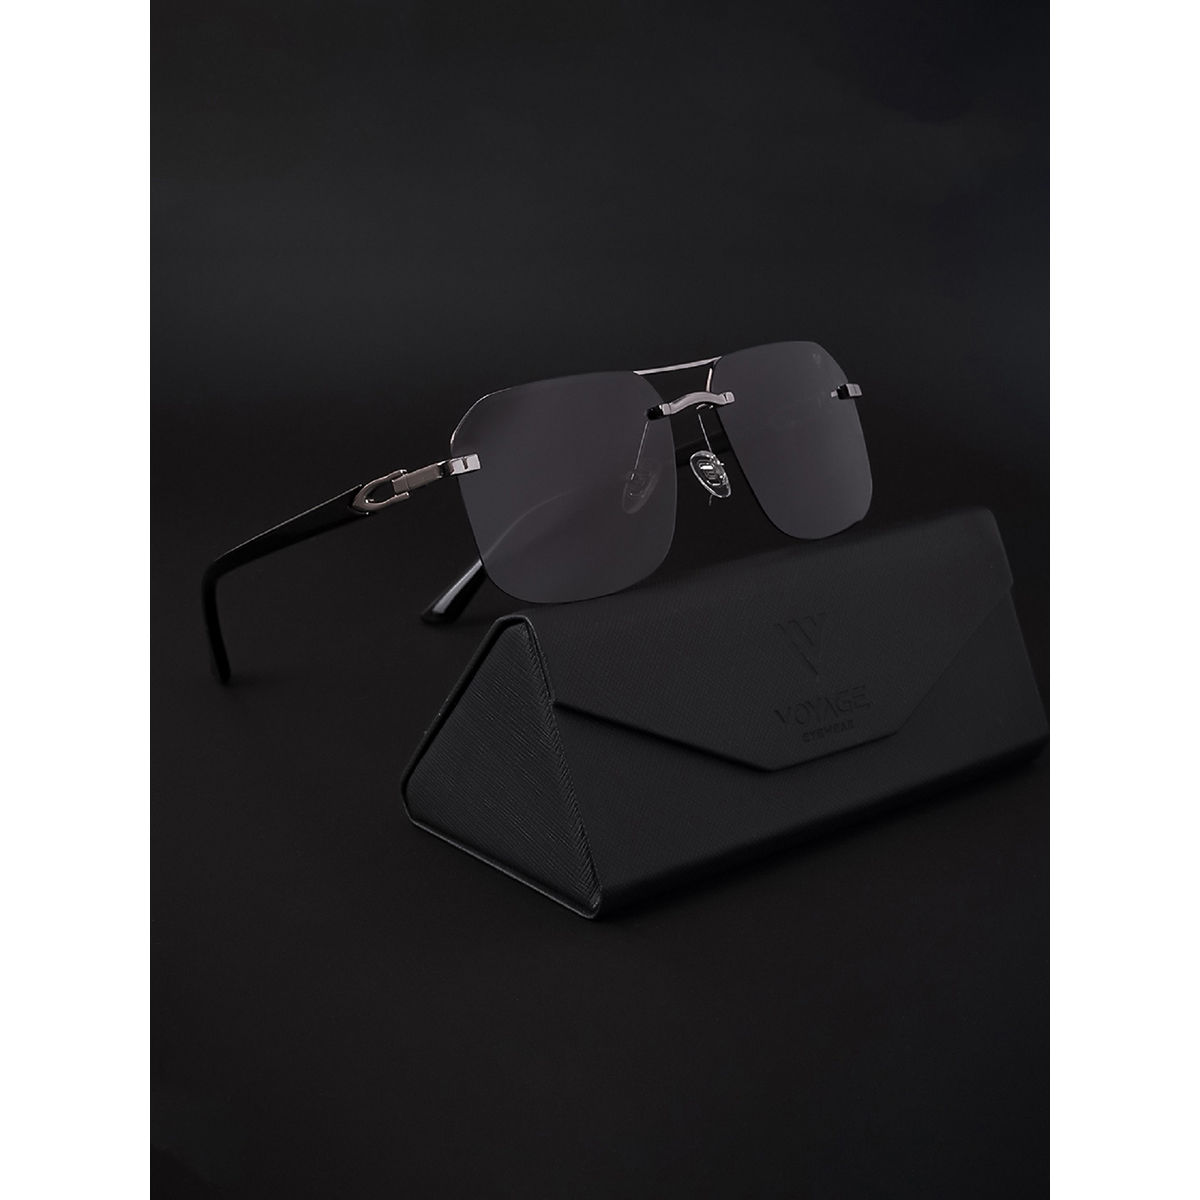 Voyage Exclusive Brown Polarized Wayfarer Sunglasses for Men & Women -